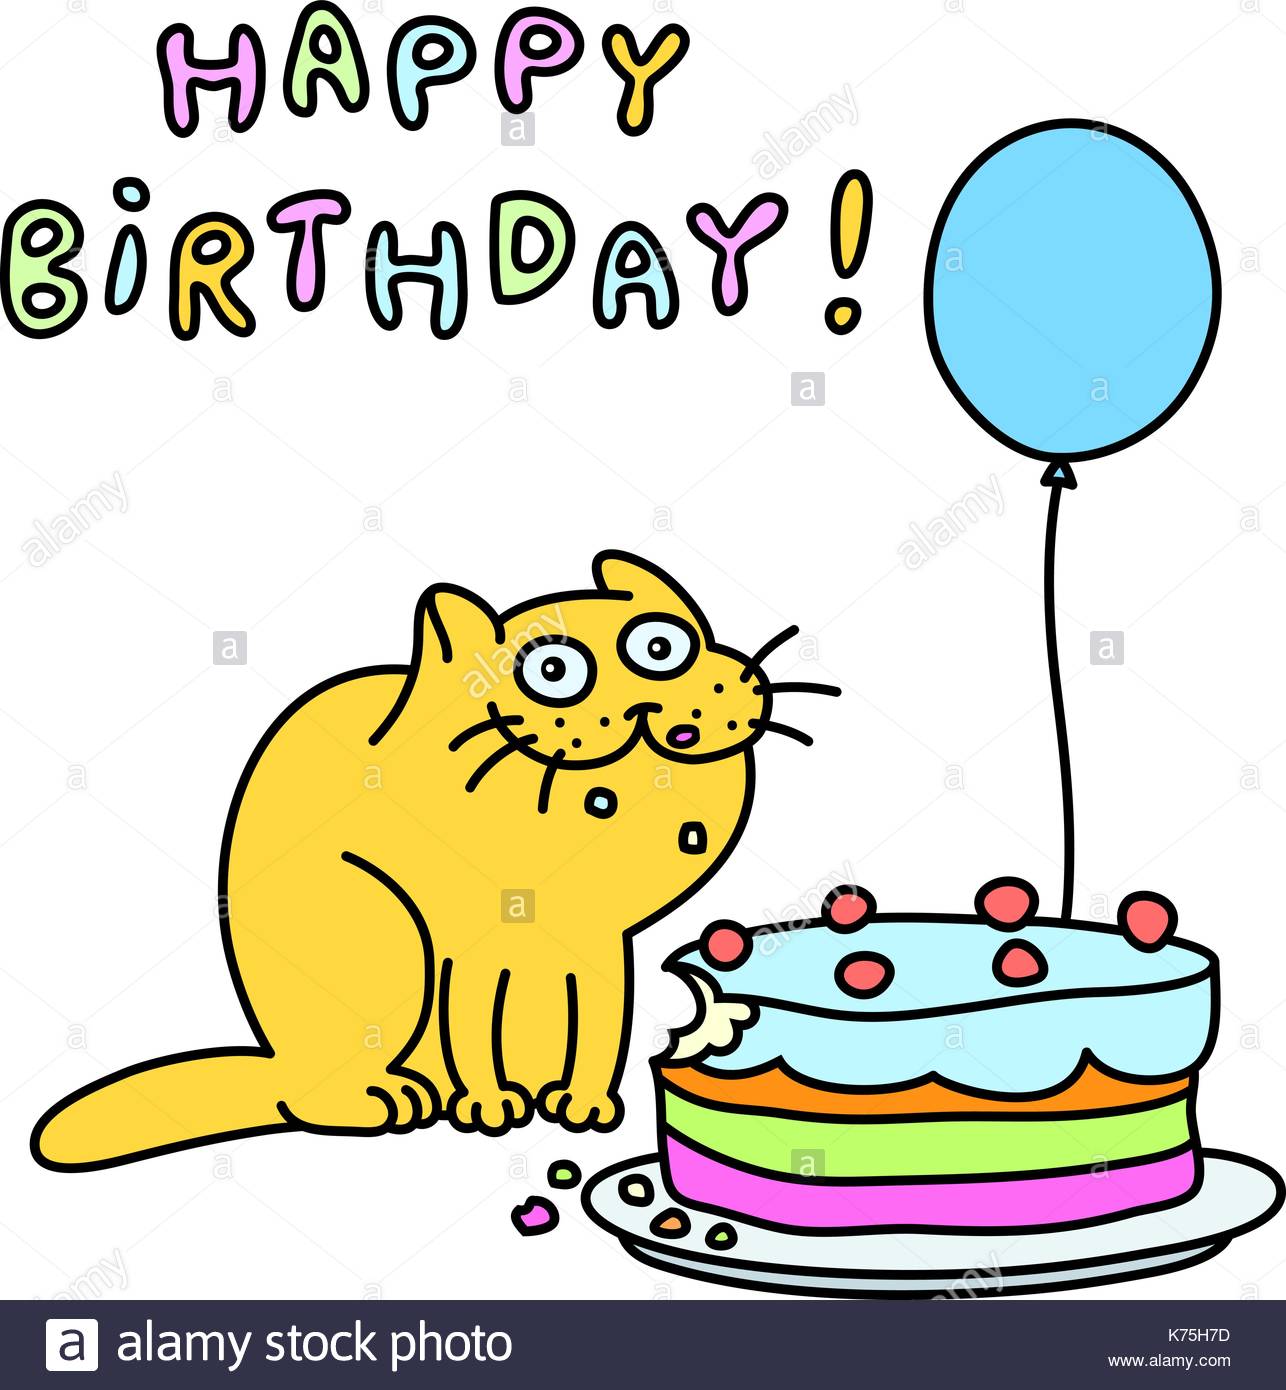 Happy Birthday Cat Clipart.